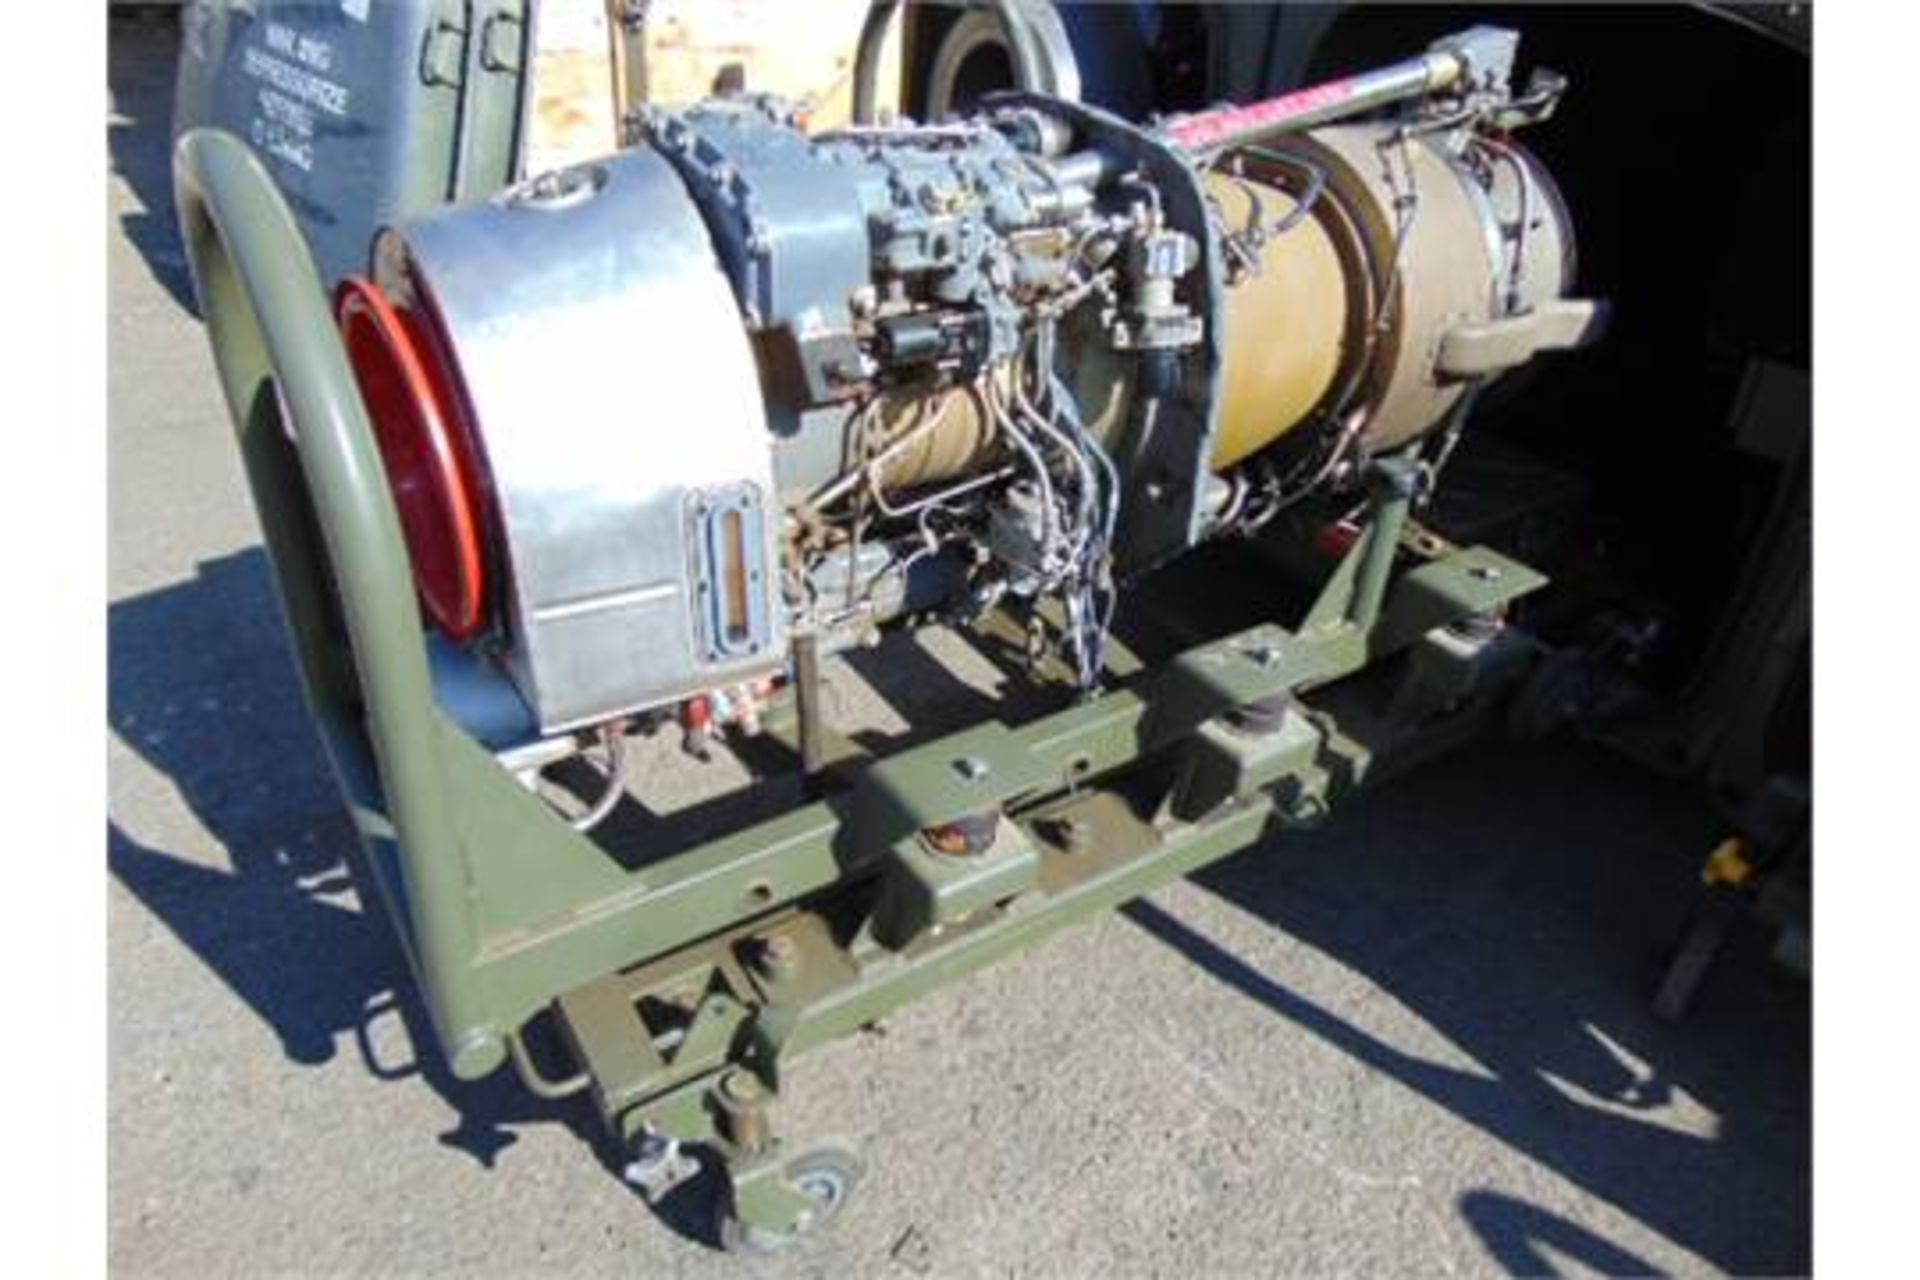 Rolls Royce / Turbomeca Turbine 3C4 Jet Engine 1300 SHP